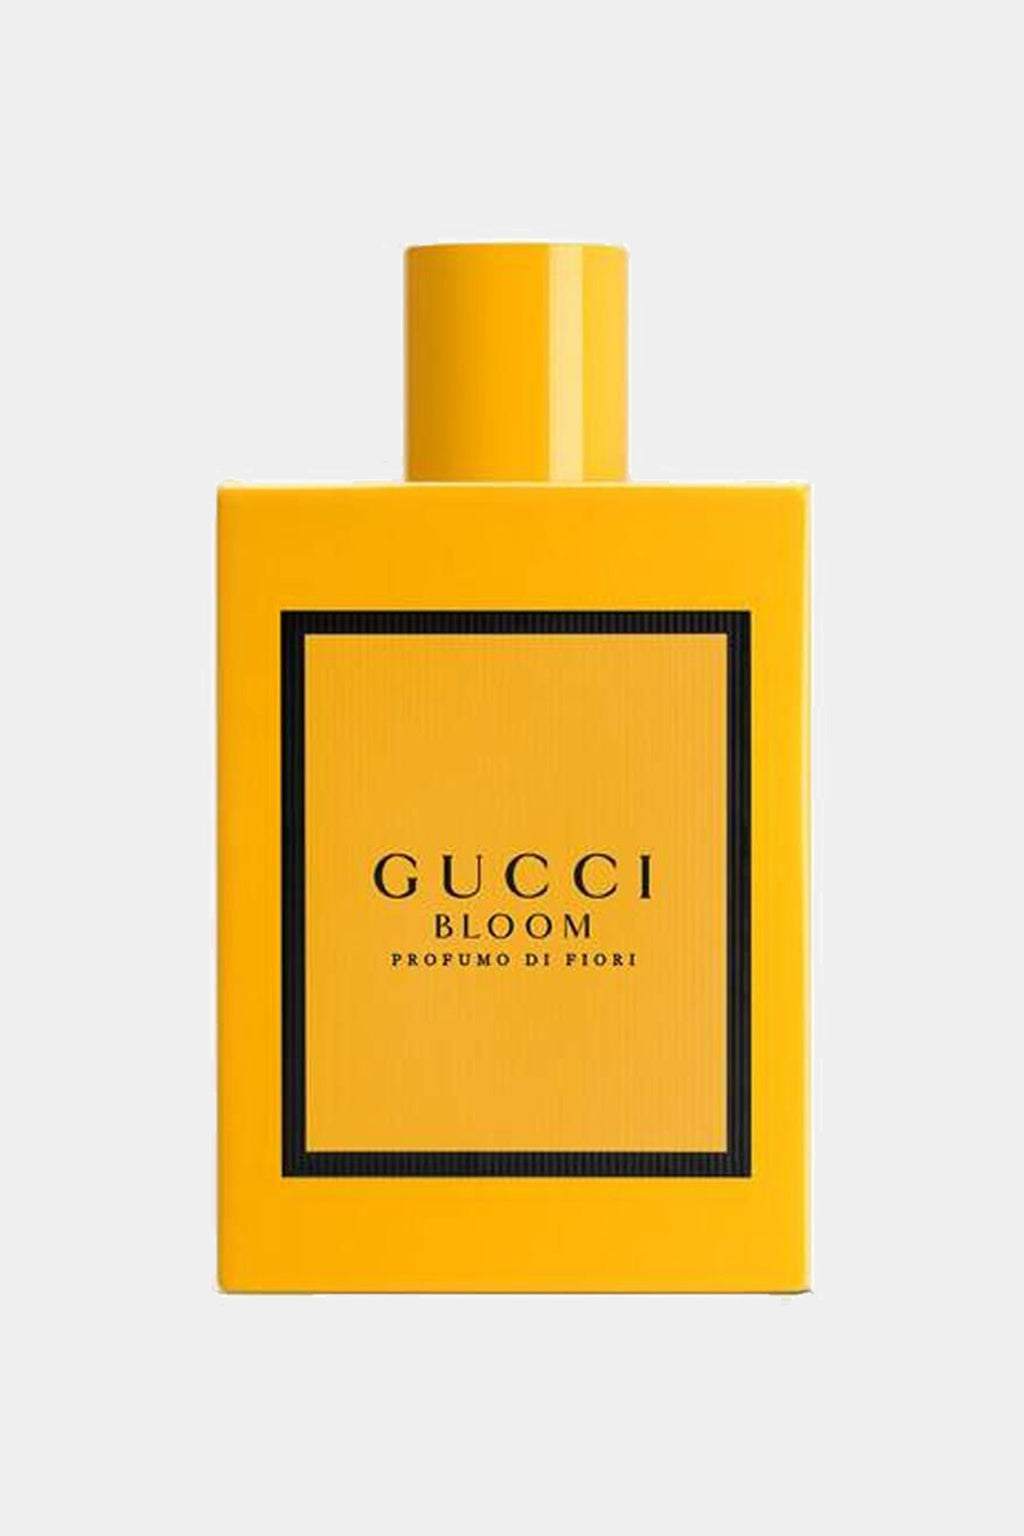 Gucci - Bloom Profumo Di Fiori Eau de Parfum